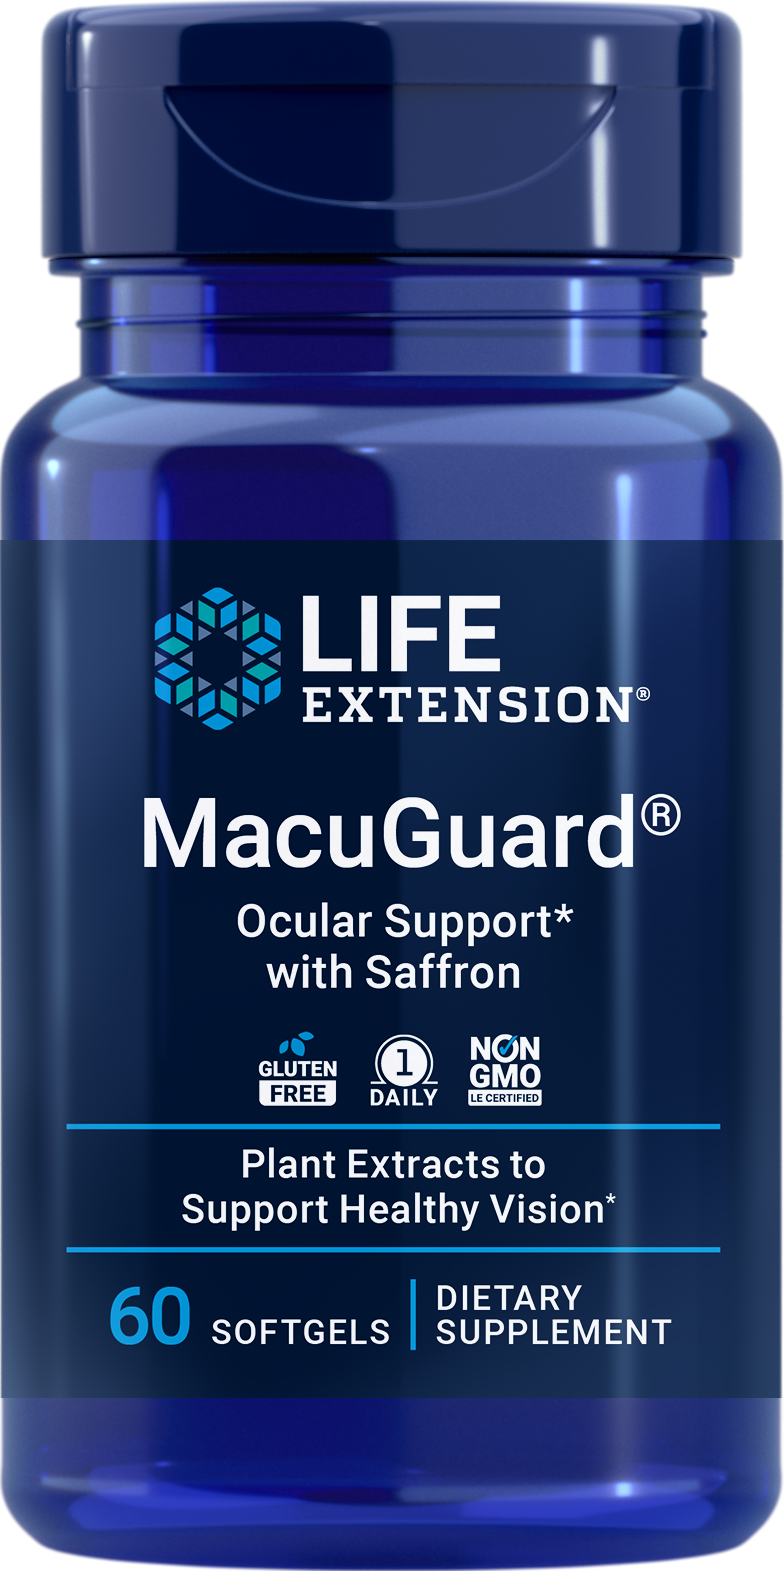 Waistline Control™, 60 vegetarian capsules - Life Extension